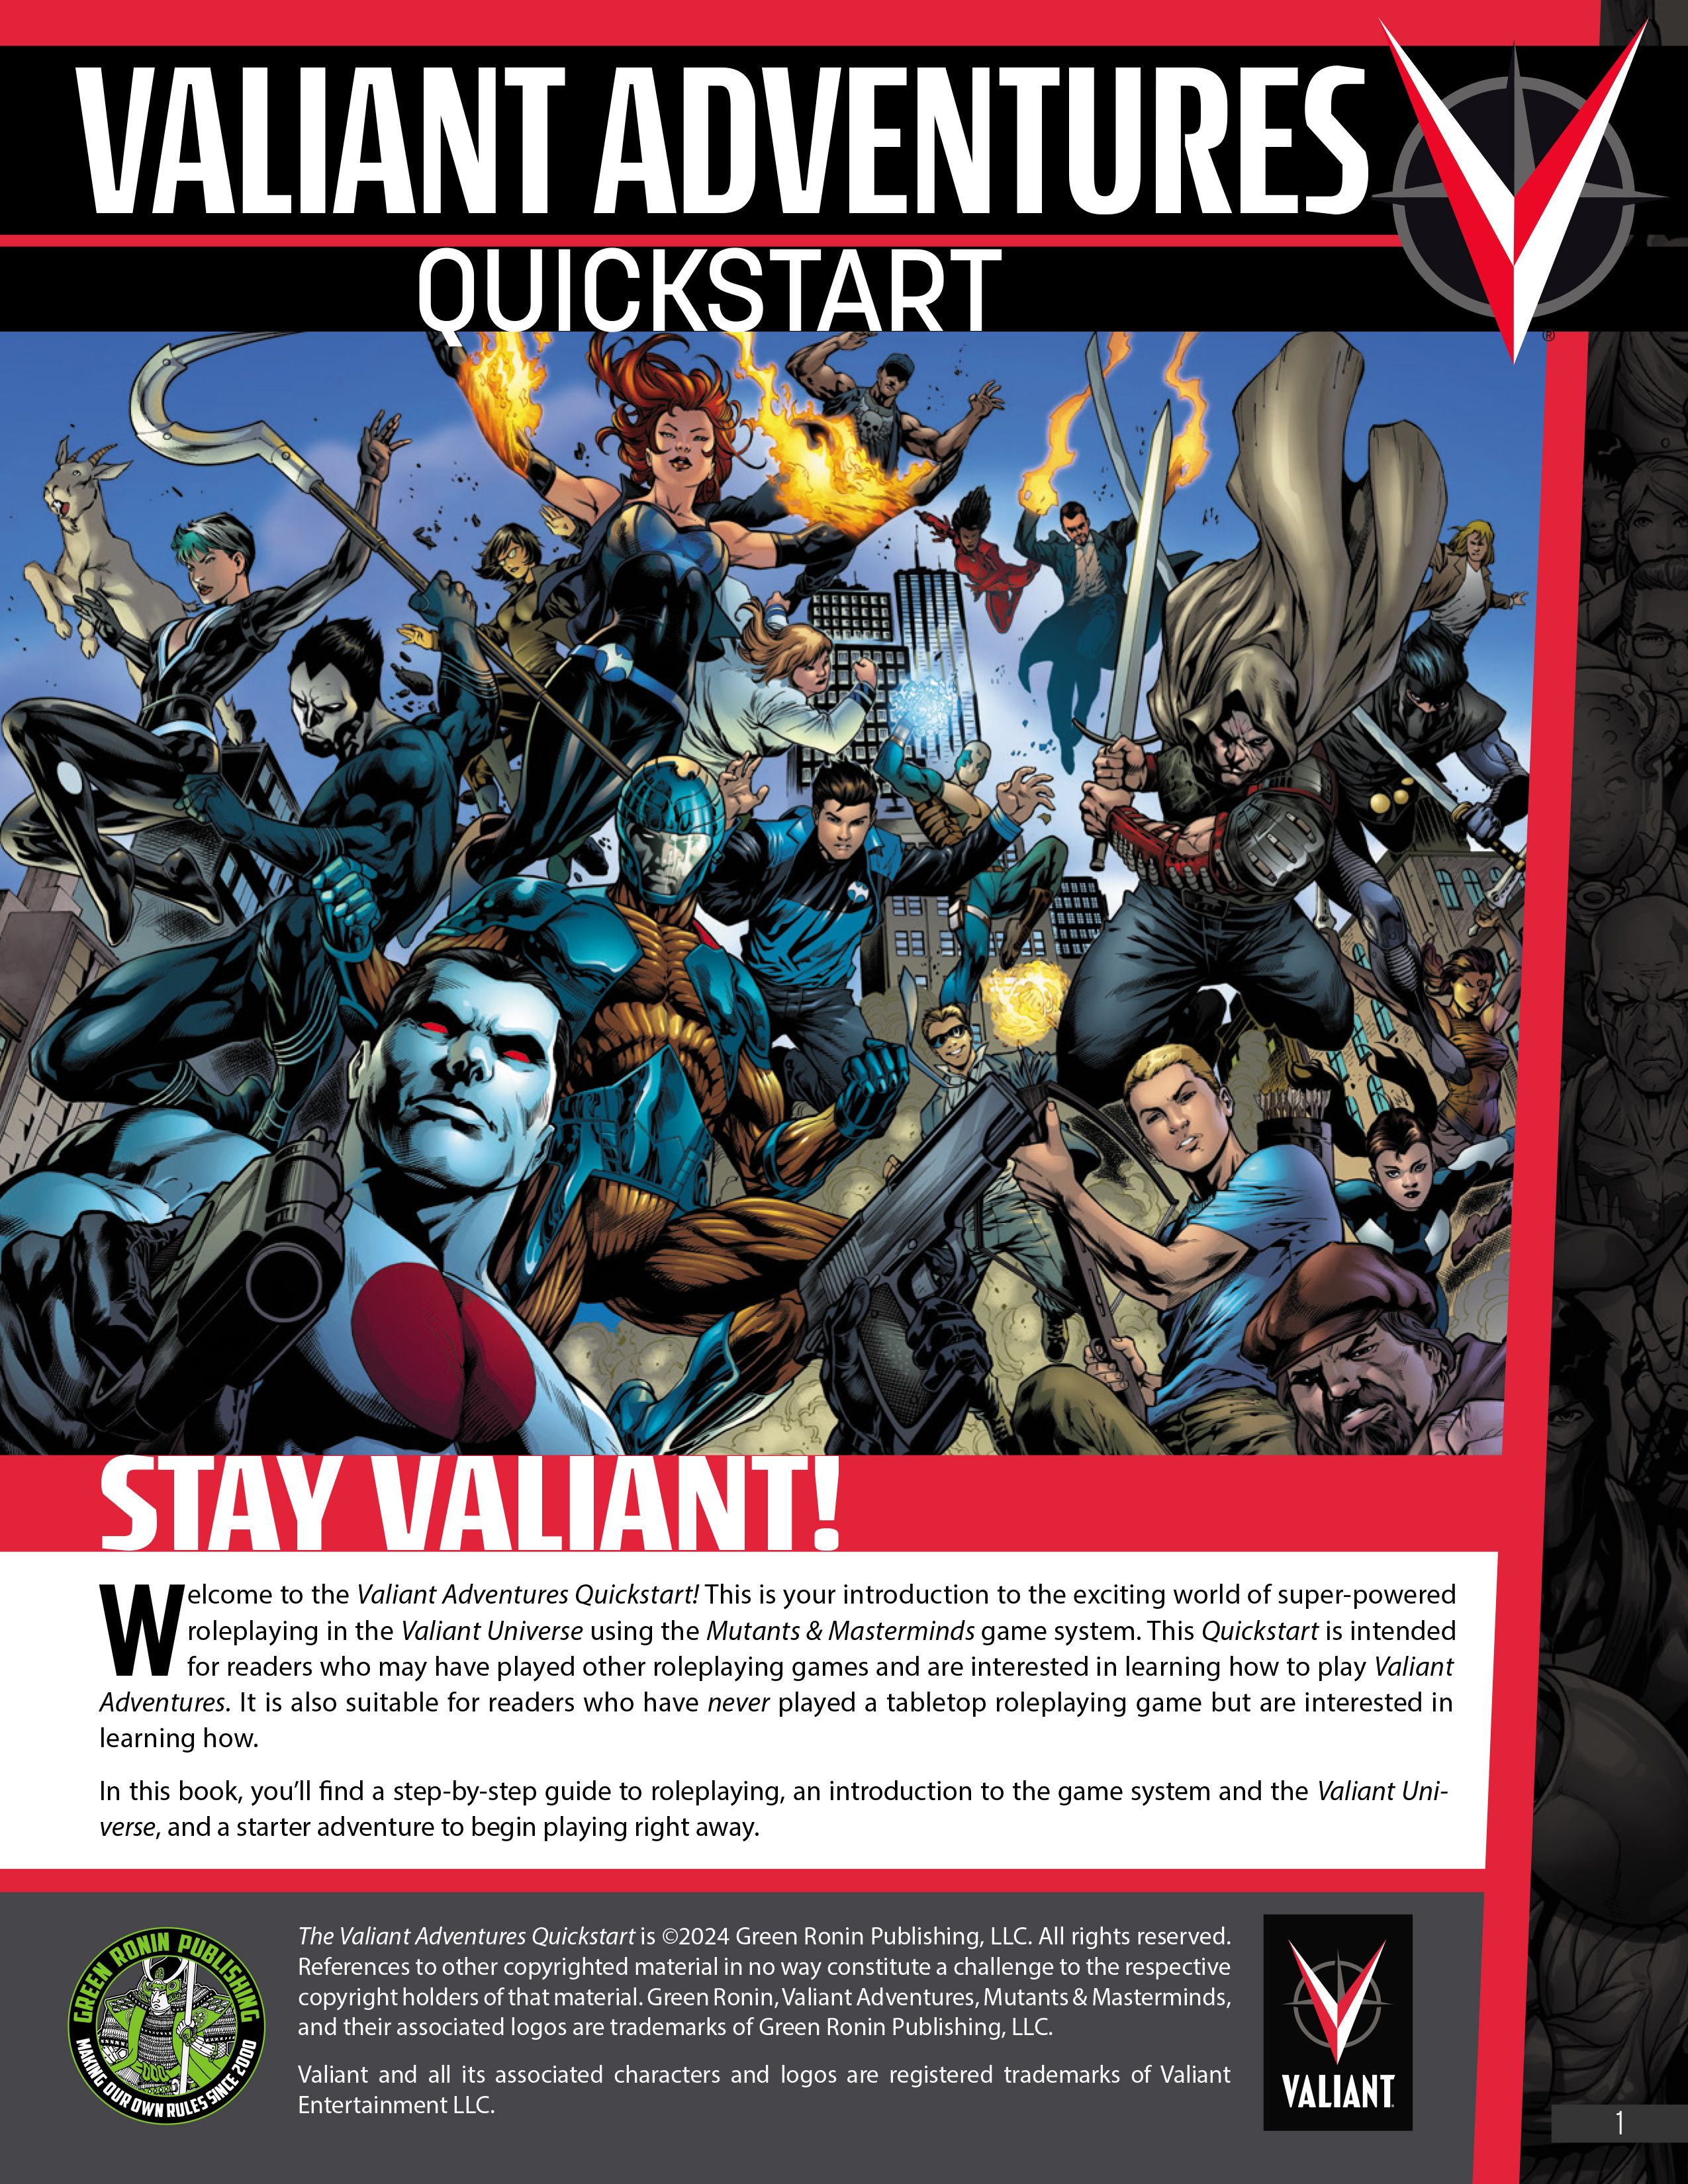 Read online The Valiant Adventures RPG Quickstart comic -  Issue # Full - 2